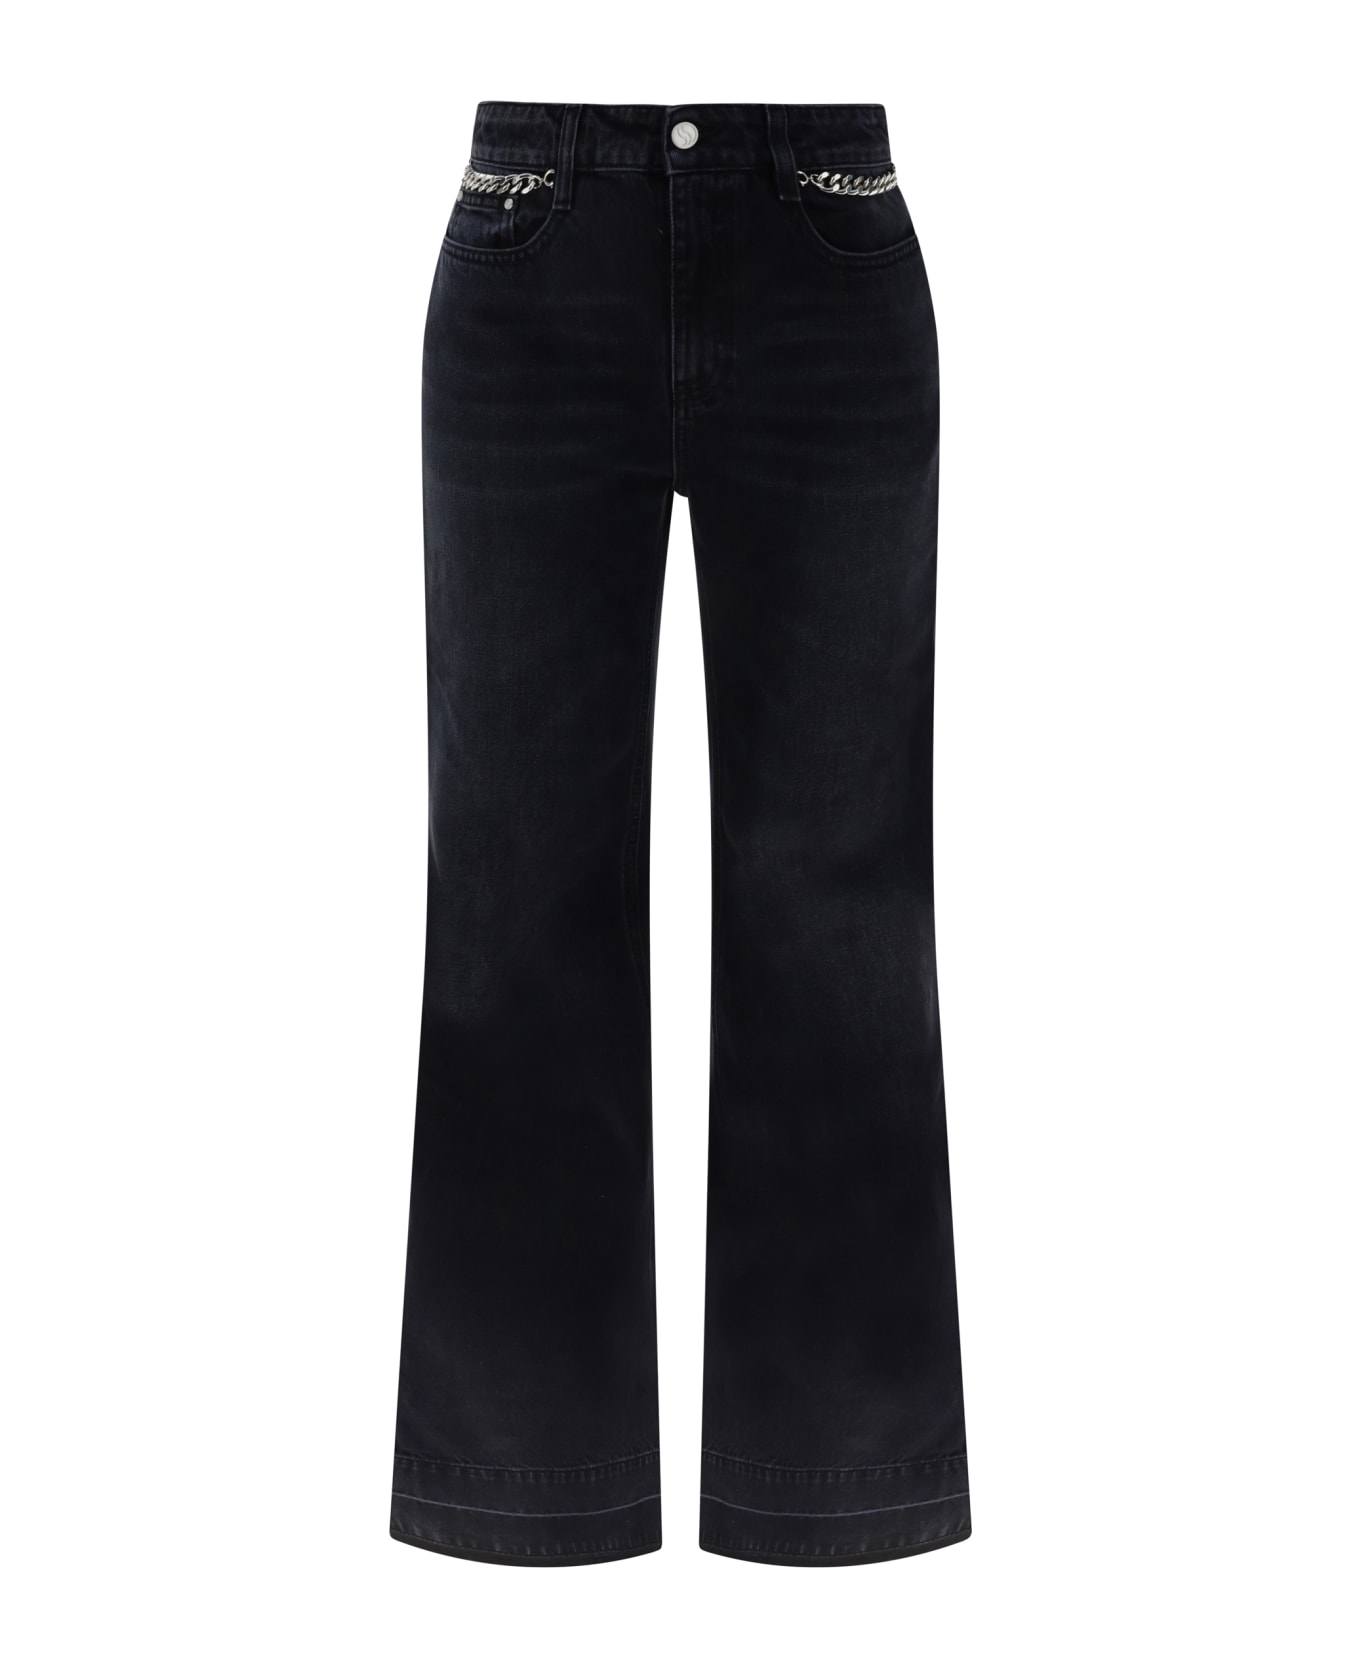 Stella McCartney Falabella 70's Jeans - Black